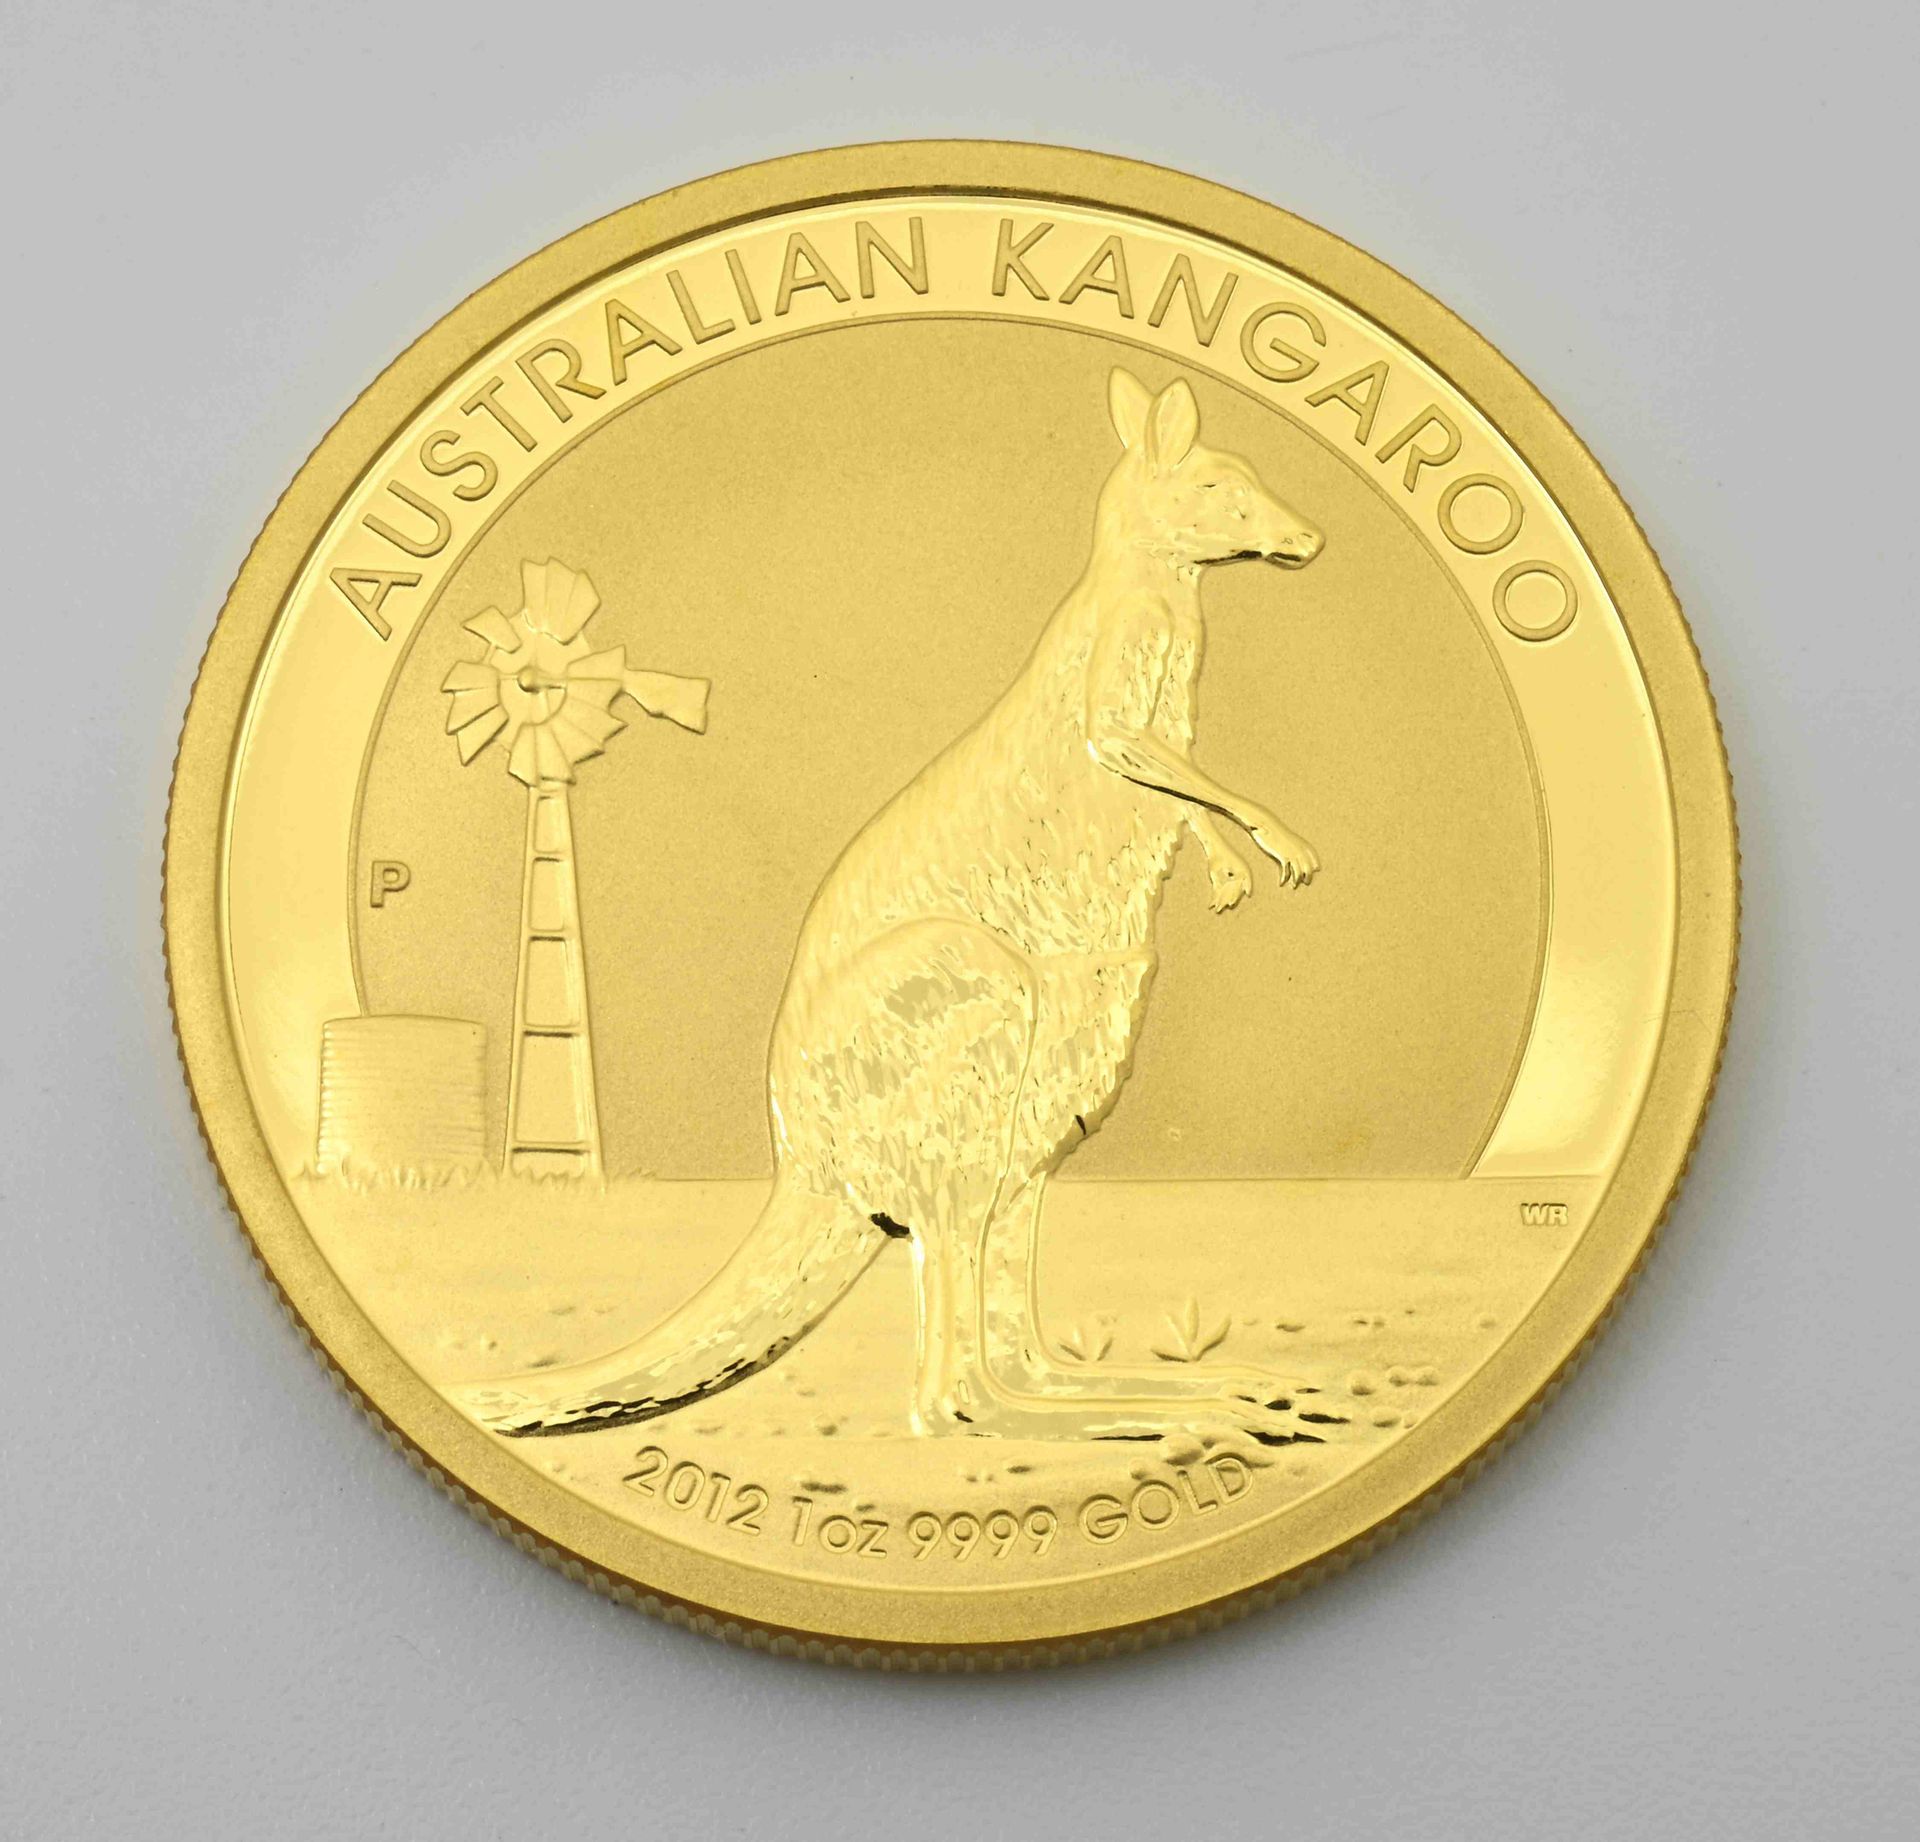 Null 澳大利亚的金块。珀斯澳大利亚100美元硬币，
一盎司9999纯金，年份2012。在单个胶囊的情况下。
 状况非常好。PN : 31,06 g。 	
M&hellip;